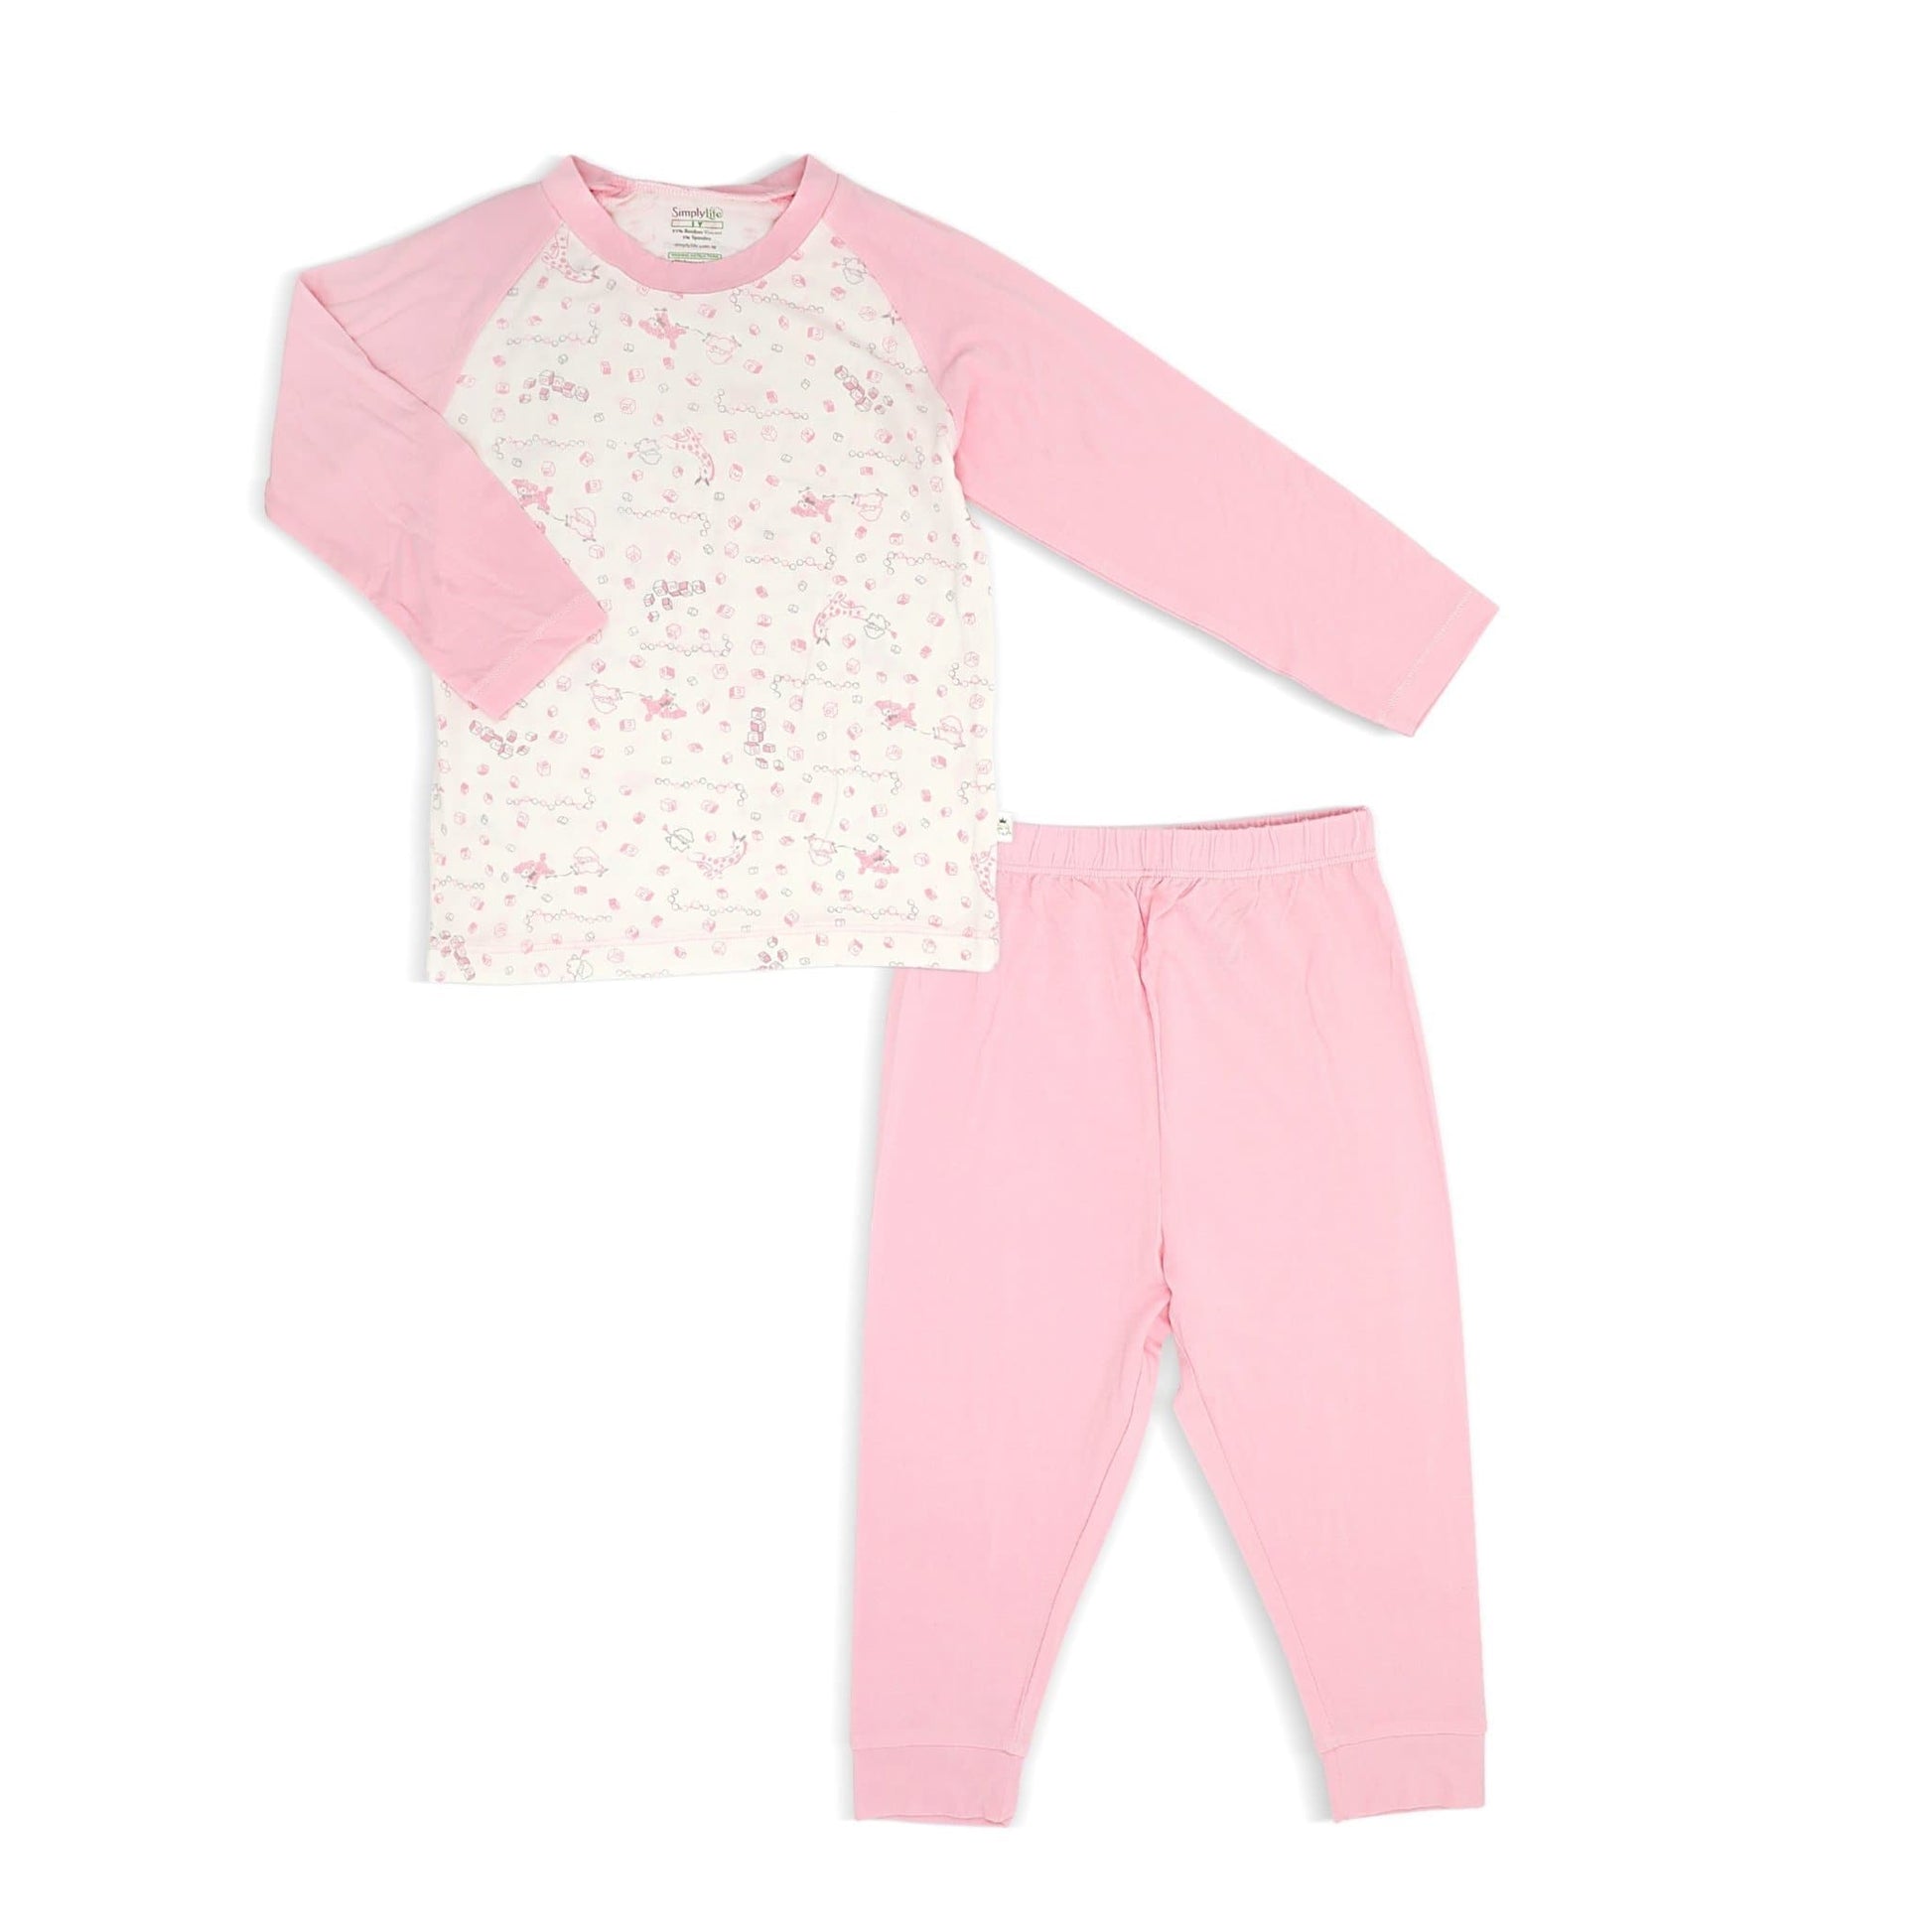 Joy Ride - Pyjamas Set with Raglan Sleeves by simplylifebaby